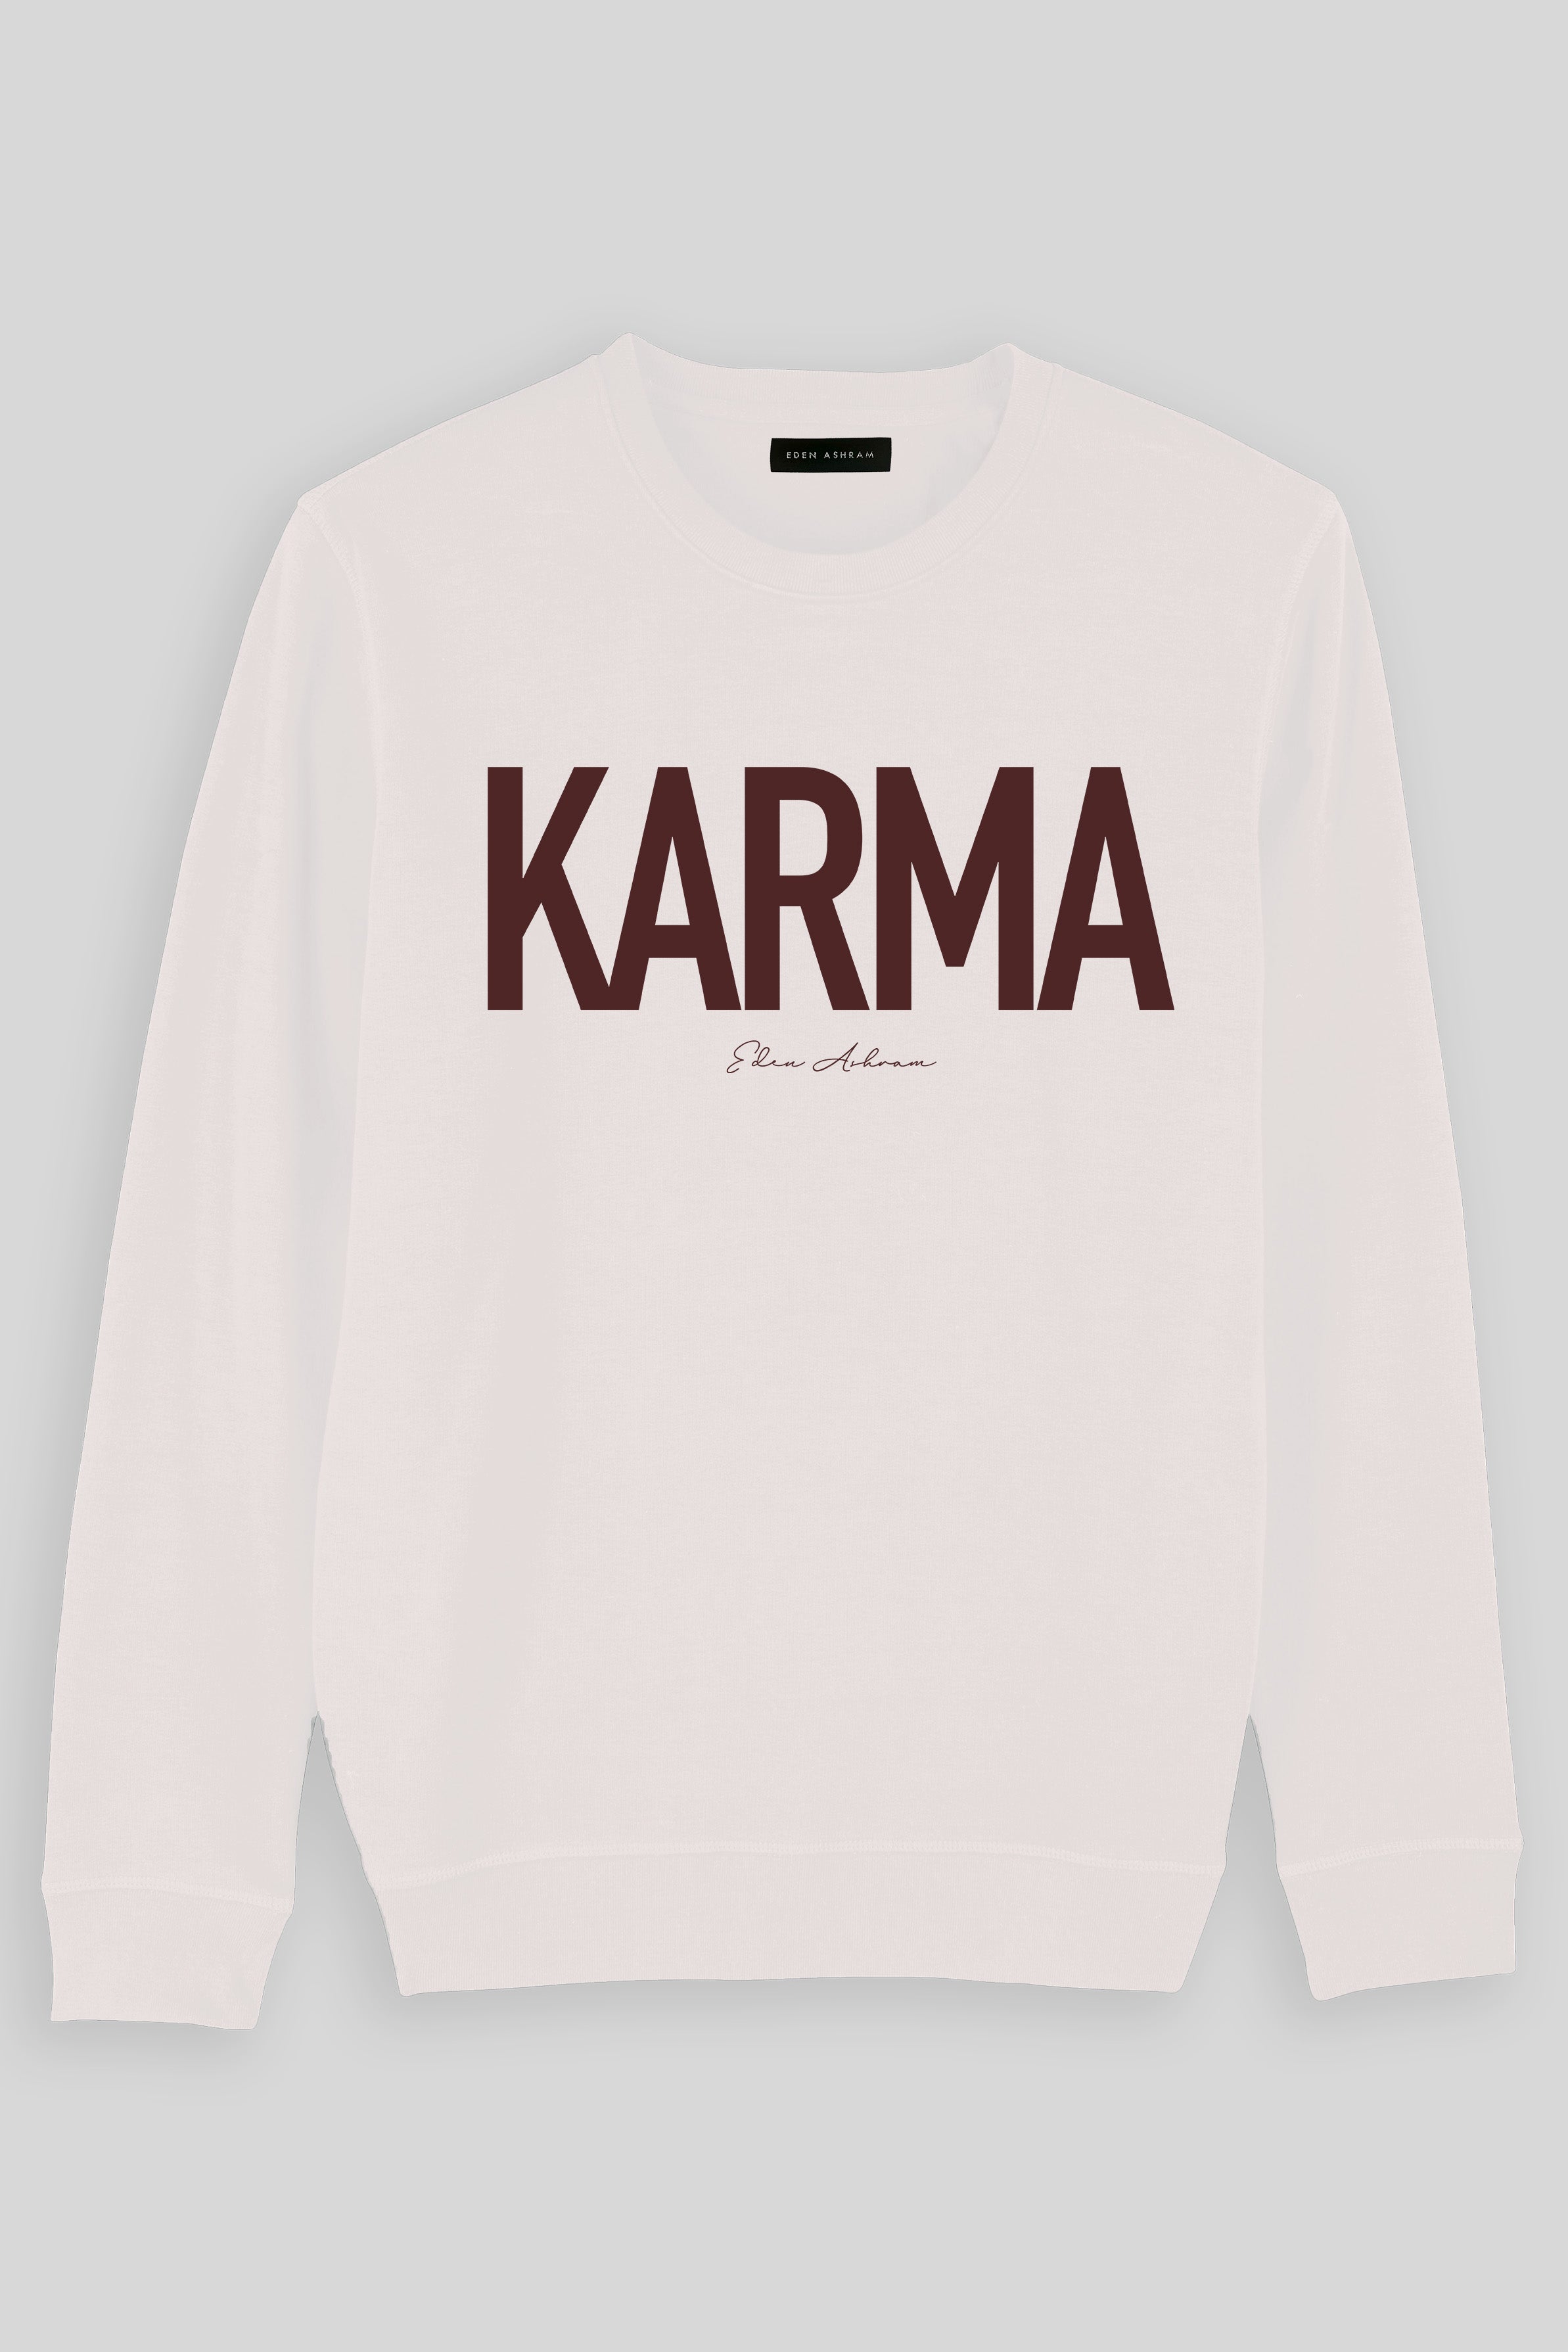 Eden Ashram Karma Premium Crew Neck Sweatshirt Vintage White